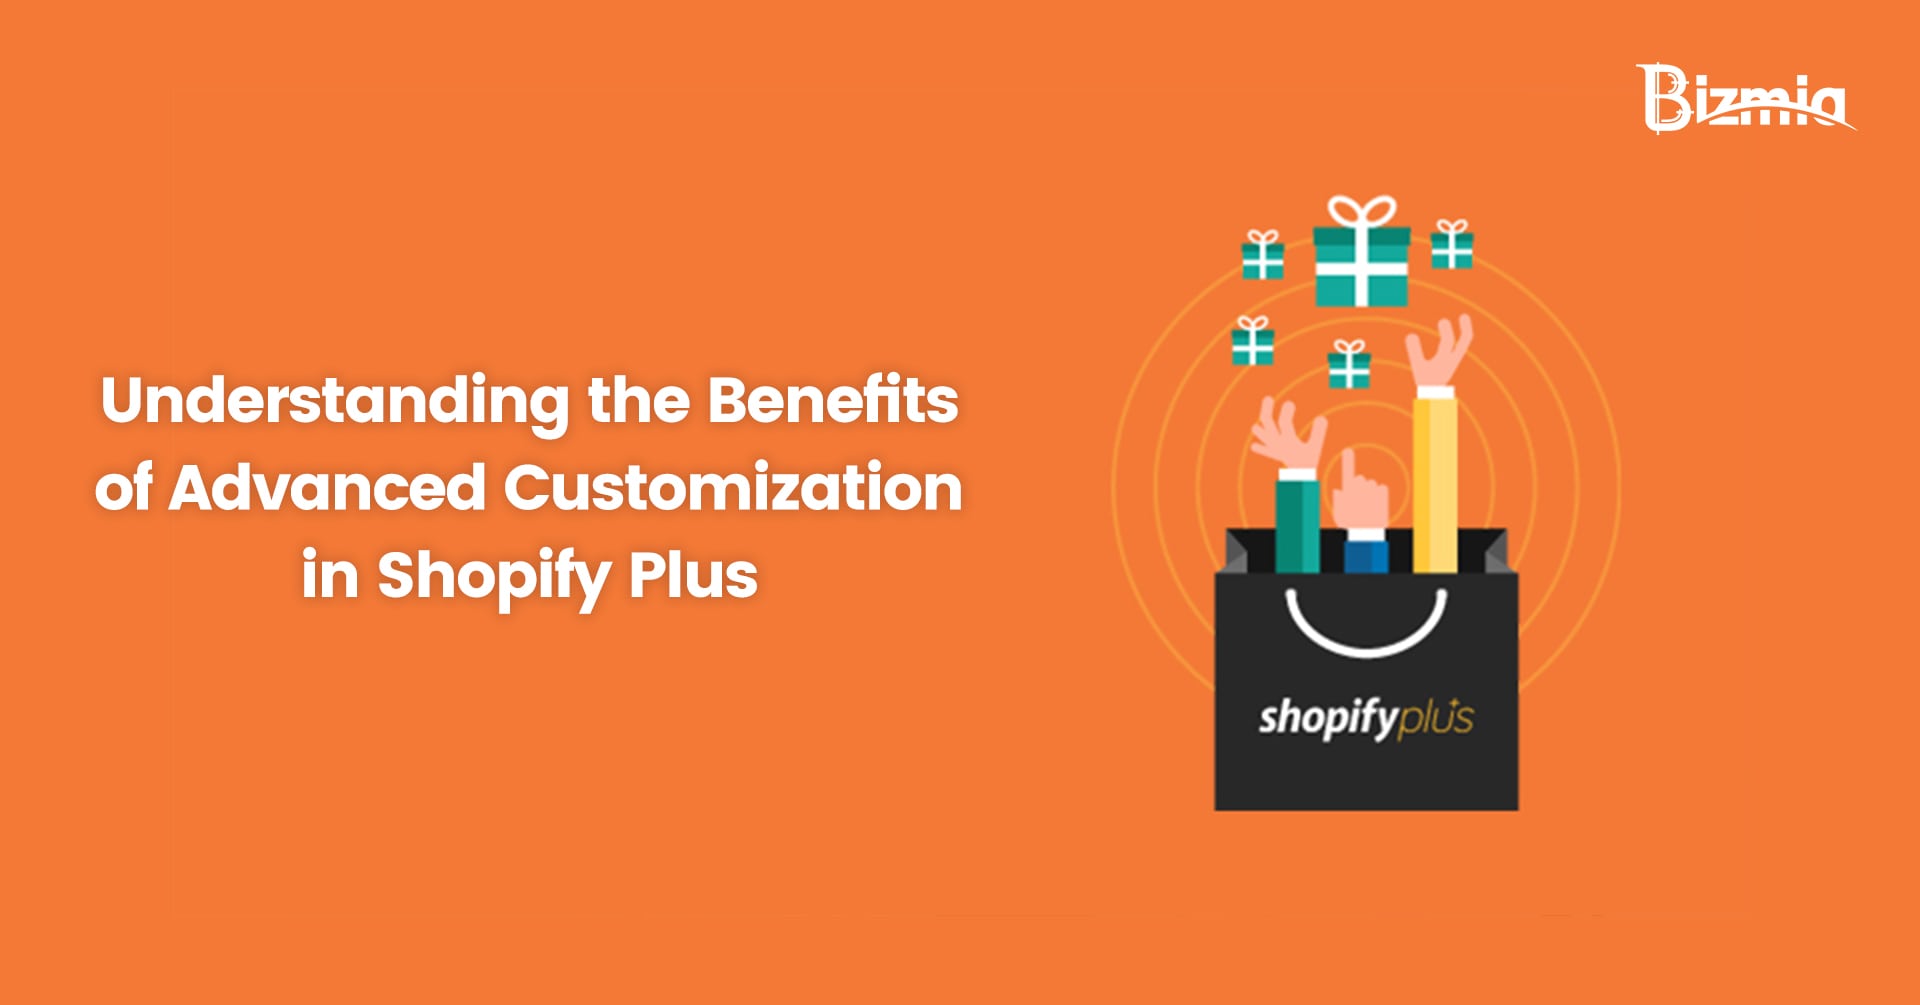 Shopify Plus Customization Services